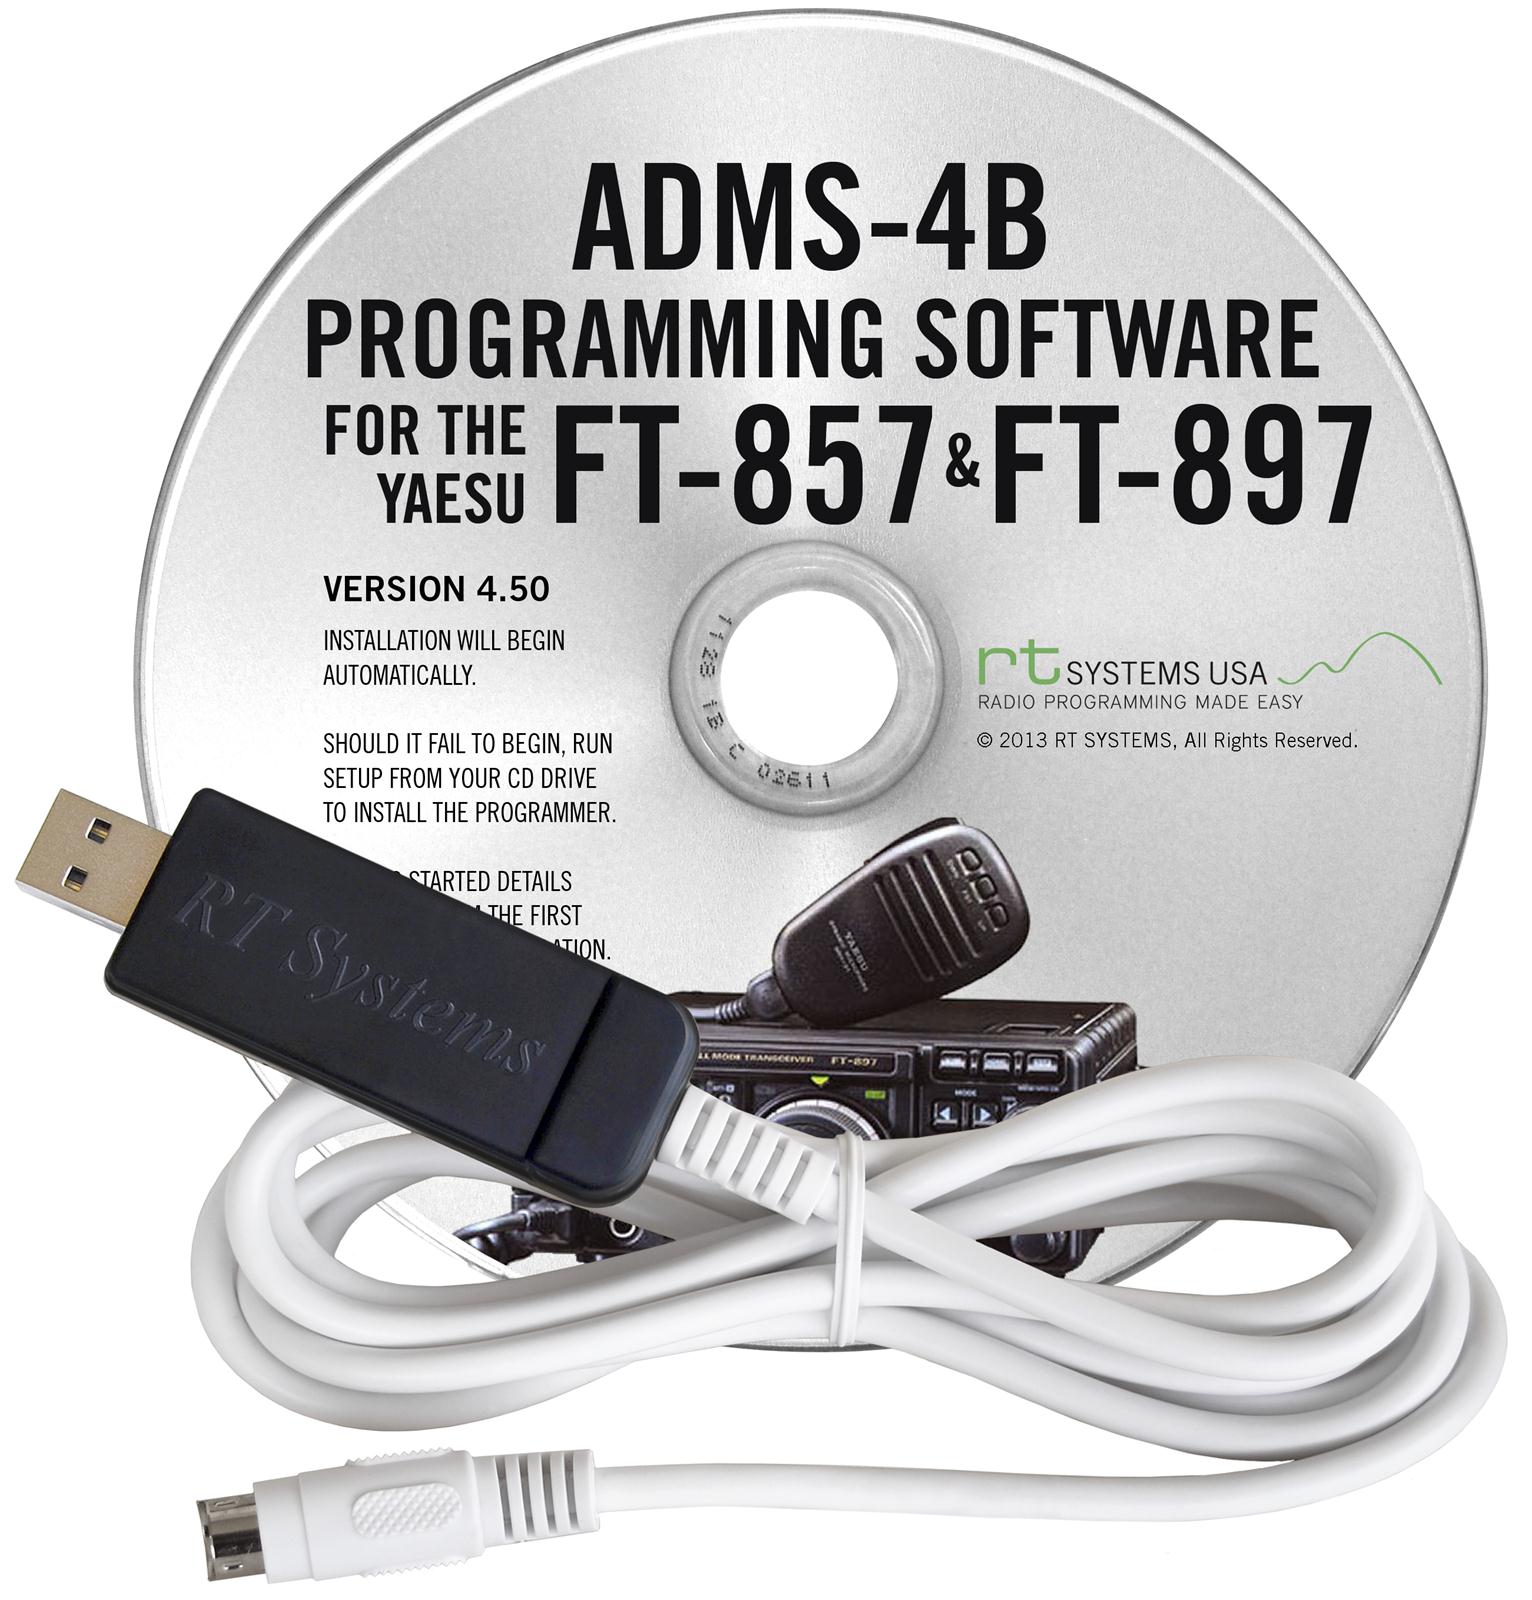 yaesu programming software download free ftm3200dr